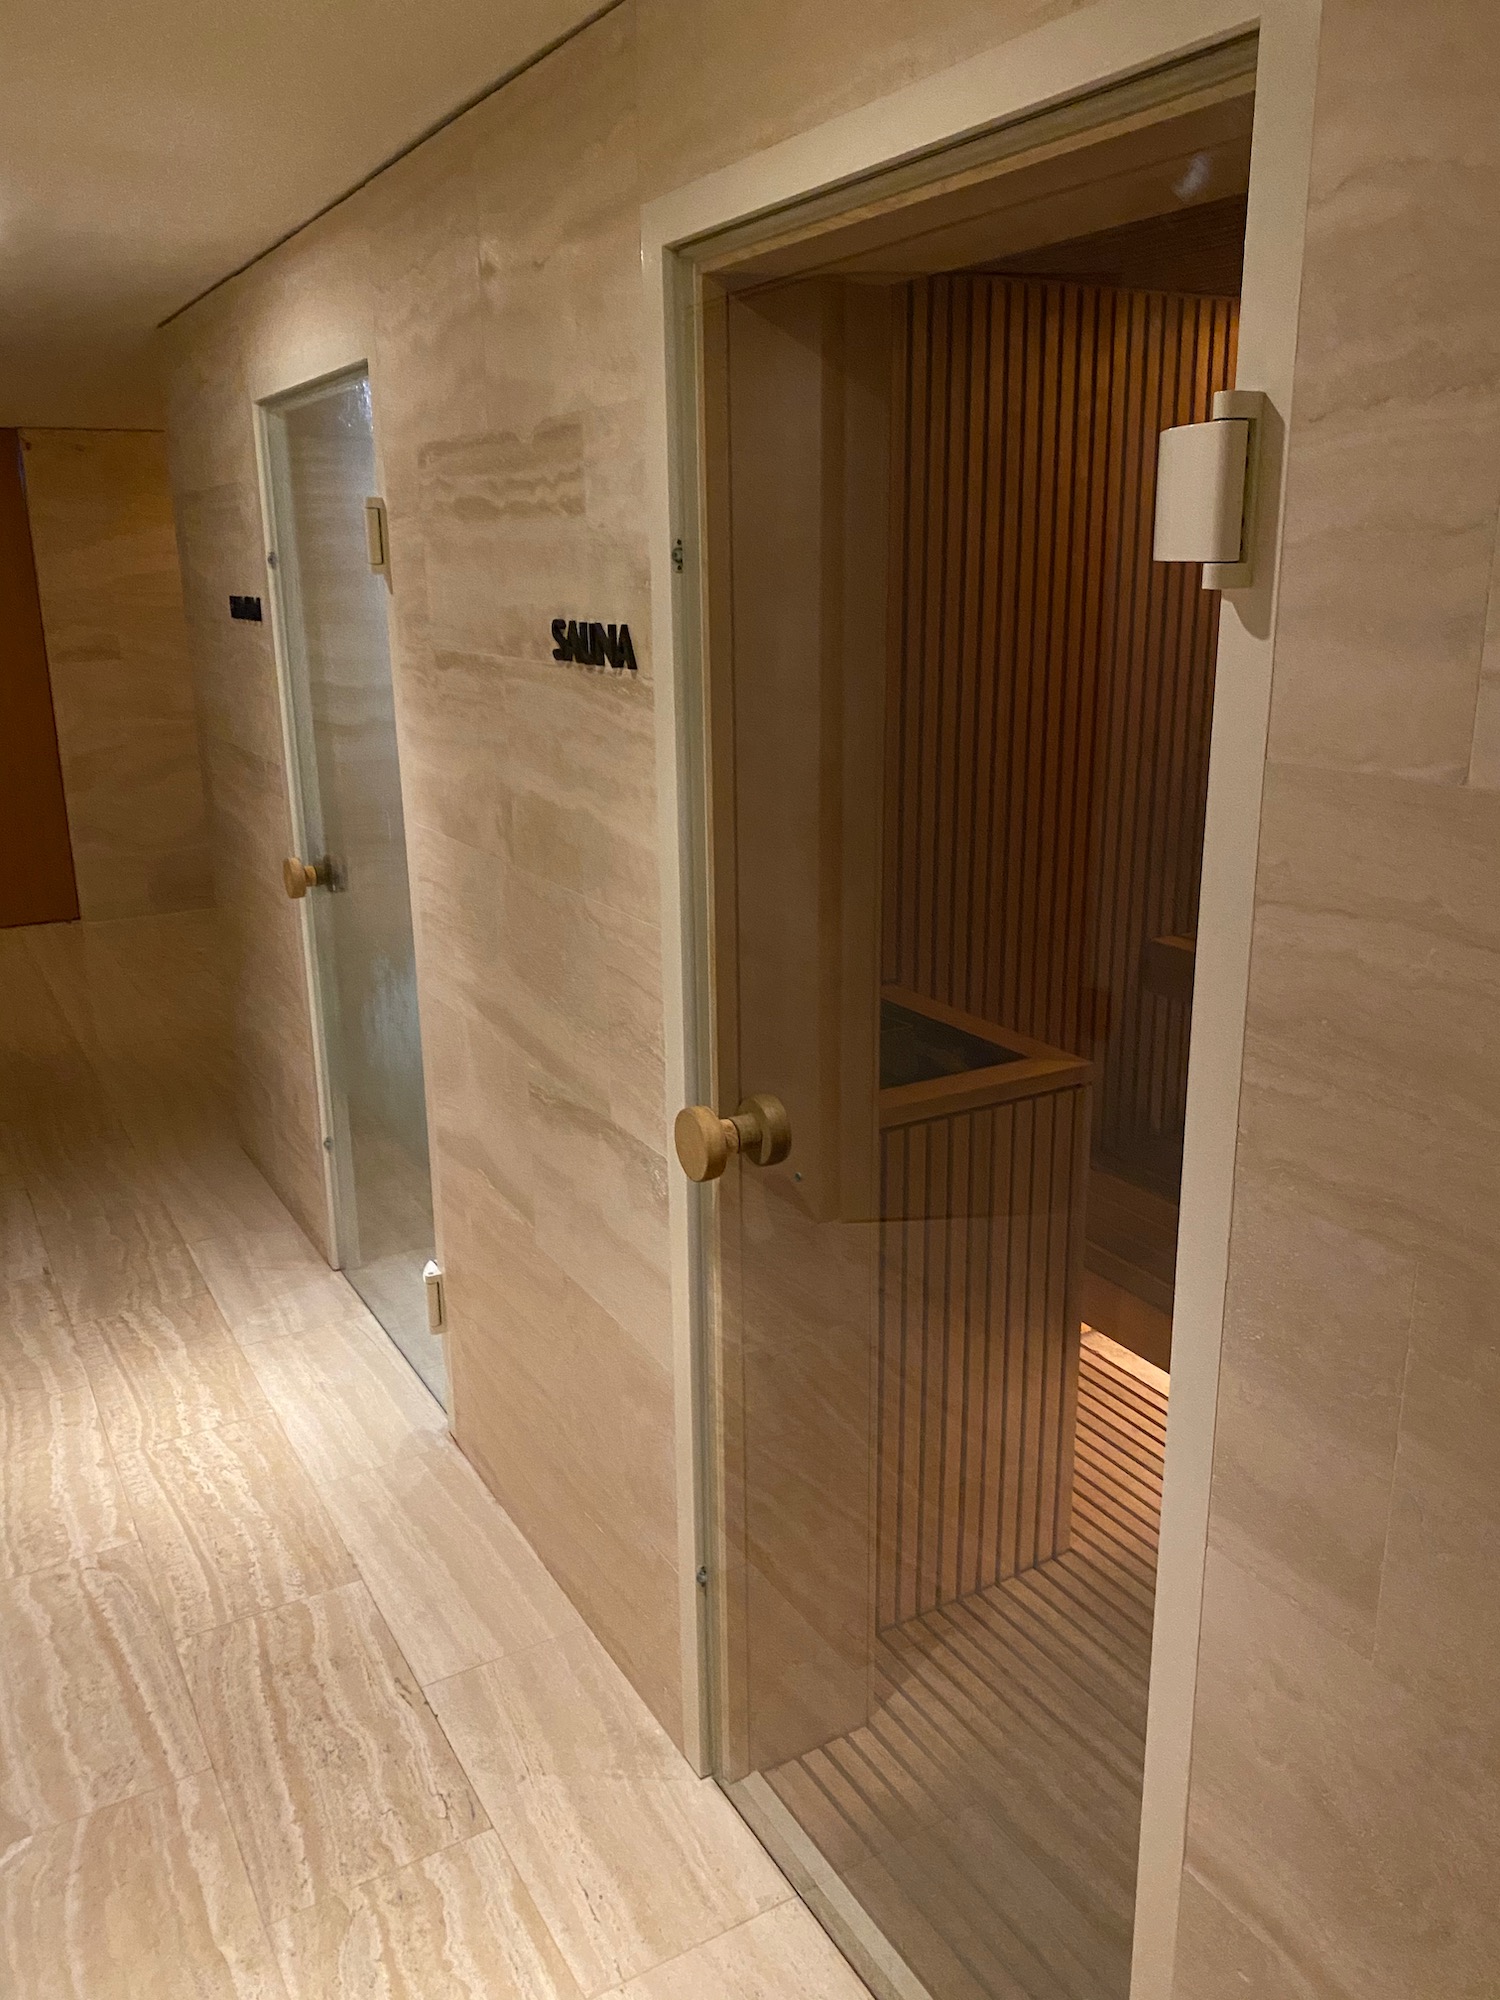 a room with a door and a sauna